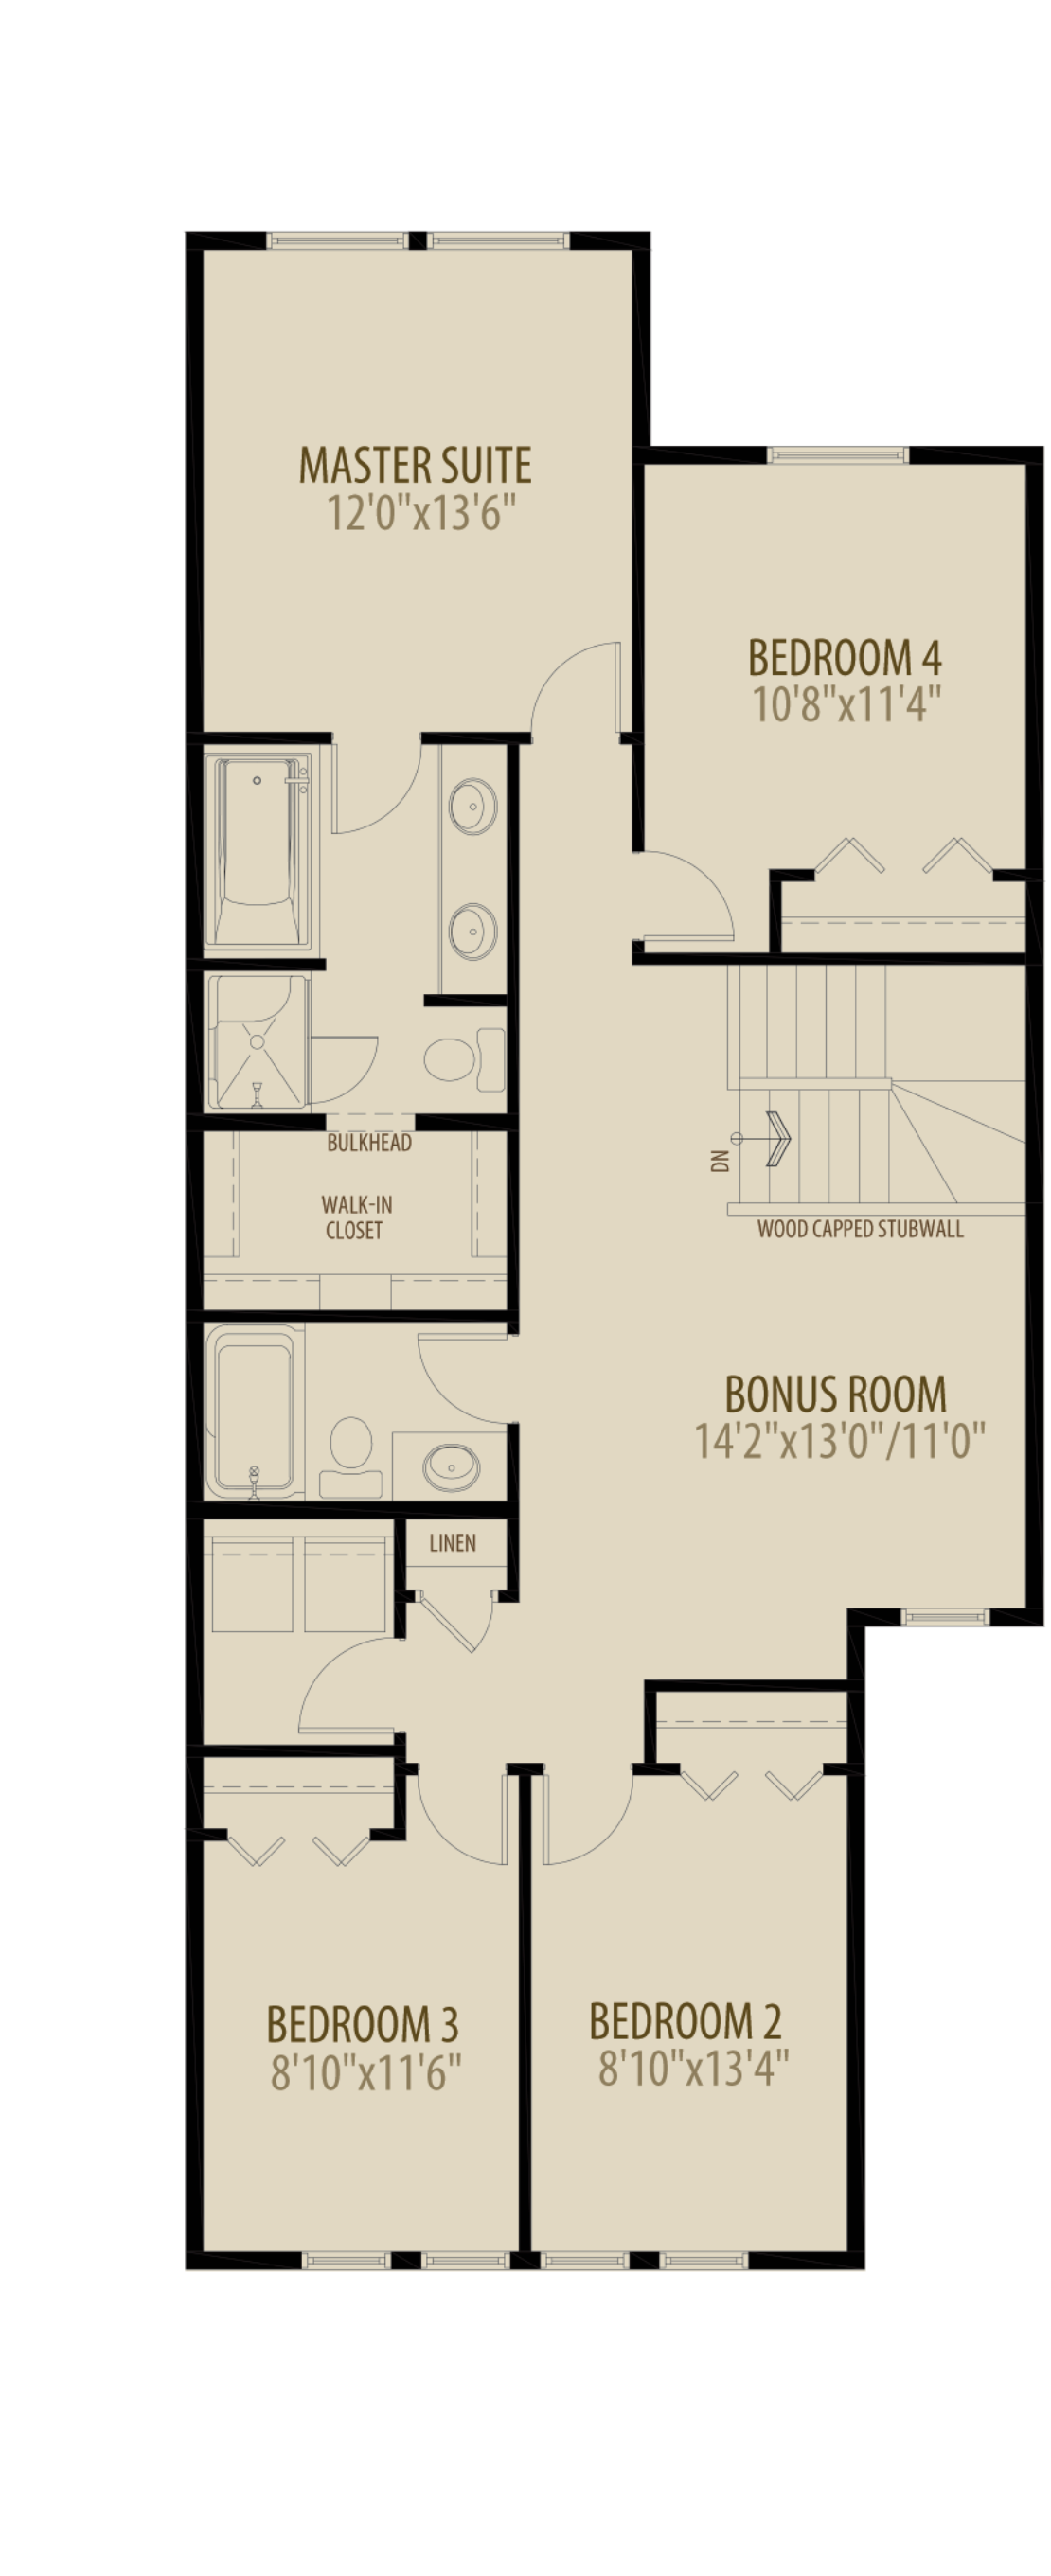 4th Bedroom Bonus Room Adds 74 sq ft